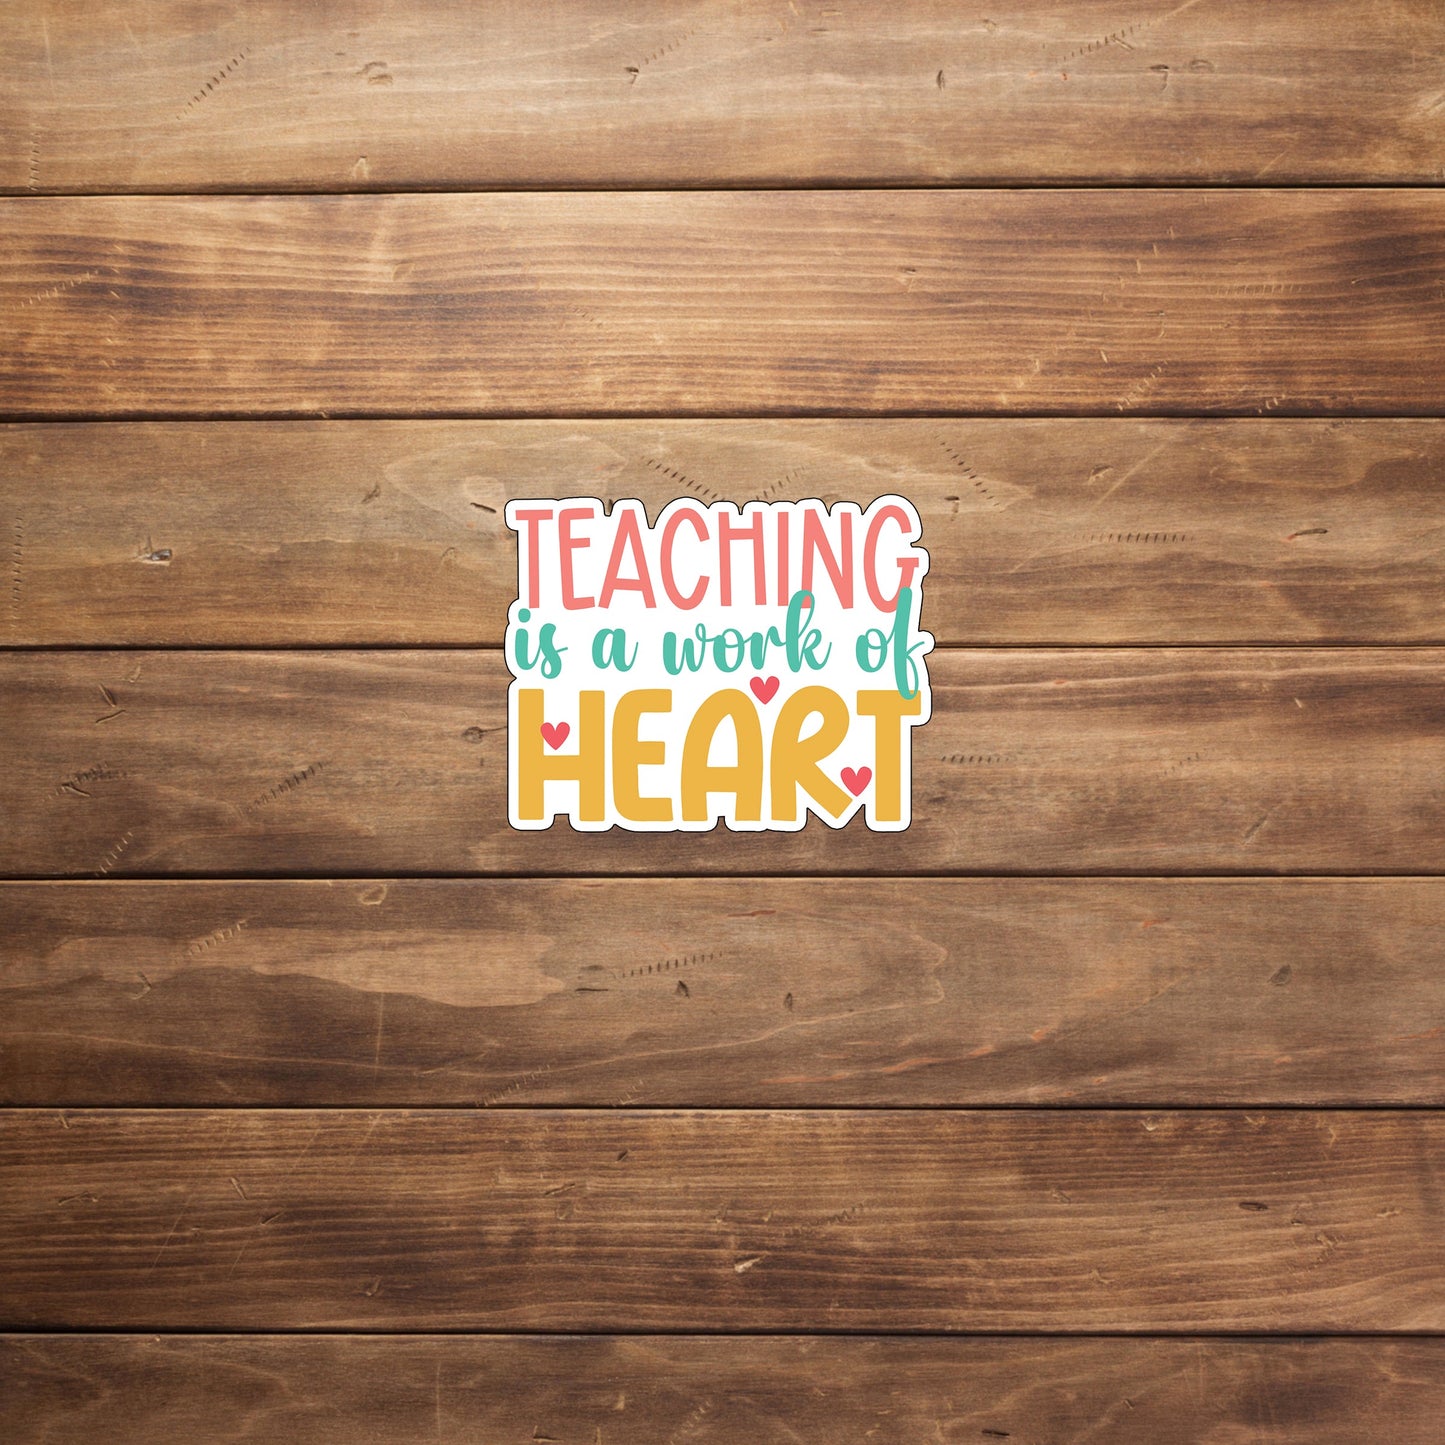 work-of-heart-sticker , Teaching Sticker